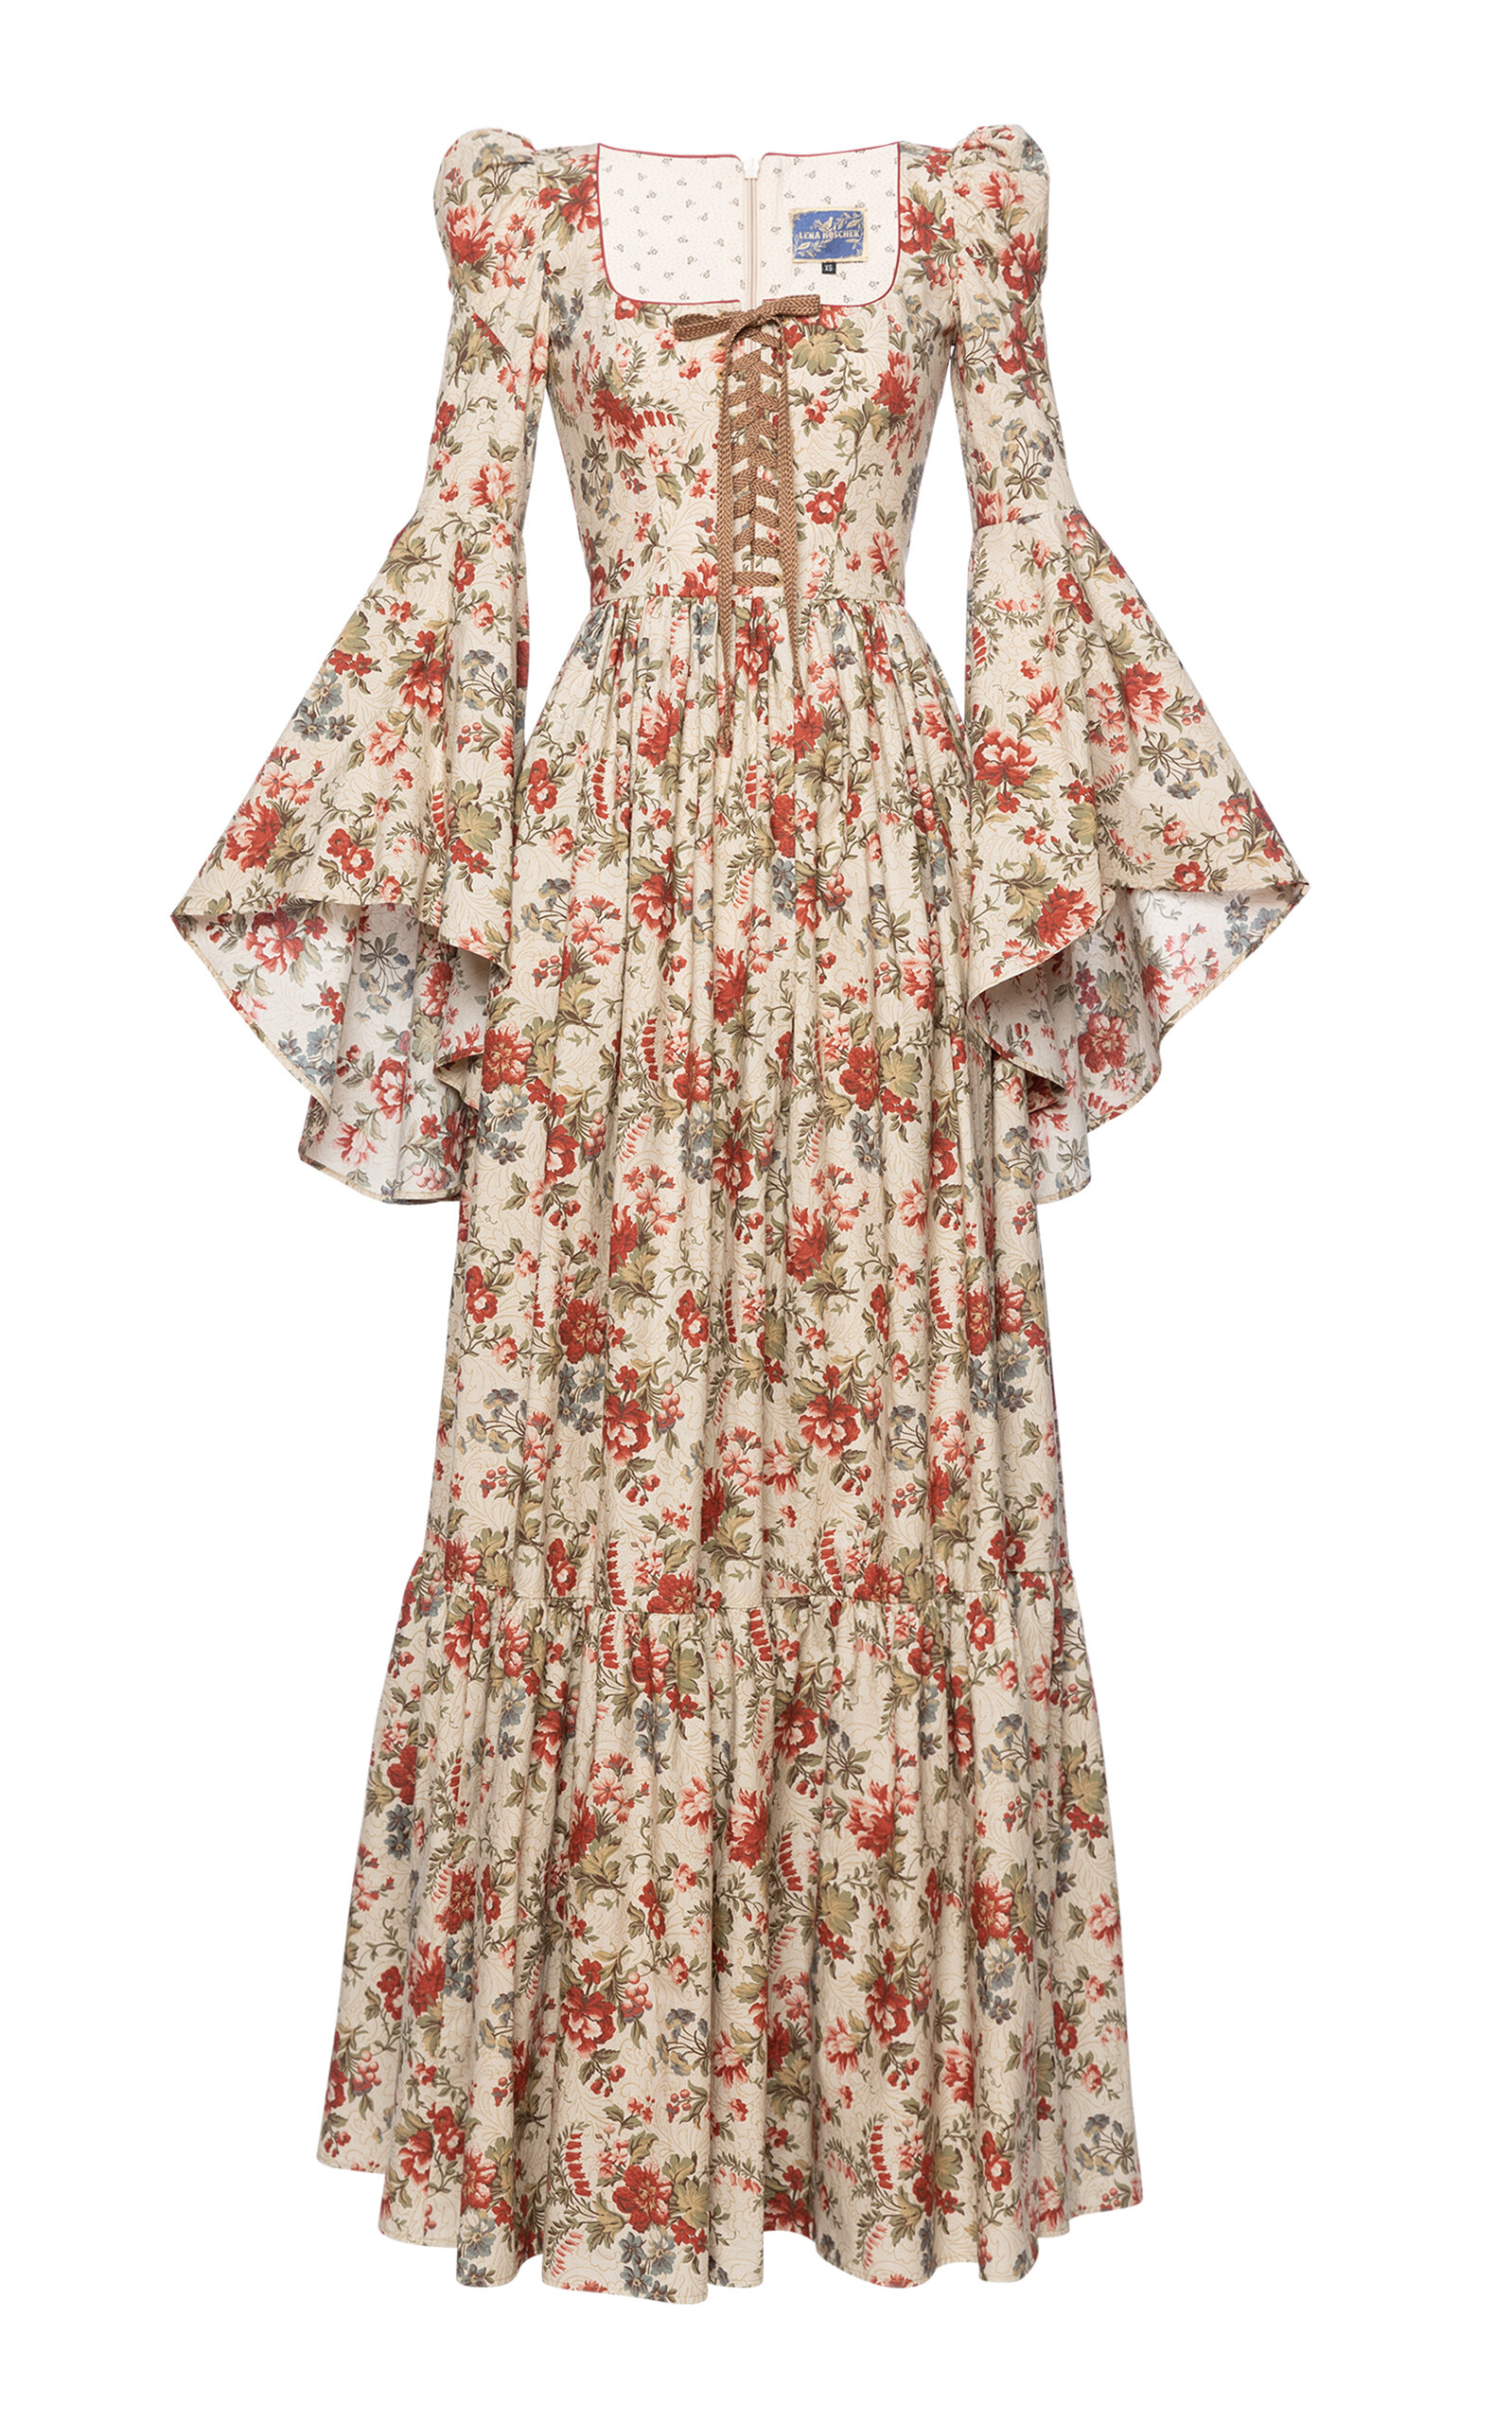 Lena Hoschek Taylor Cotton Maxi Dress In Floral